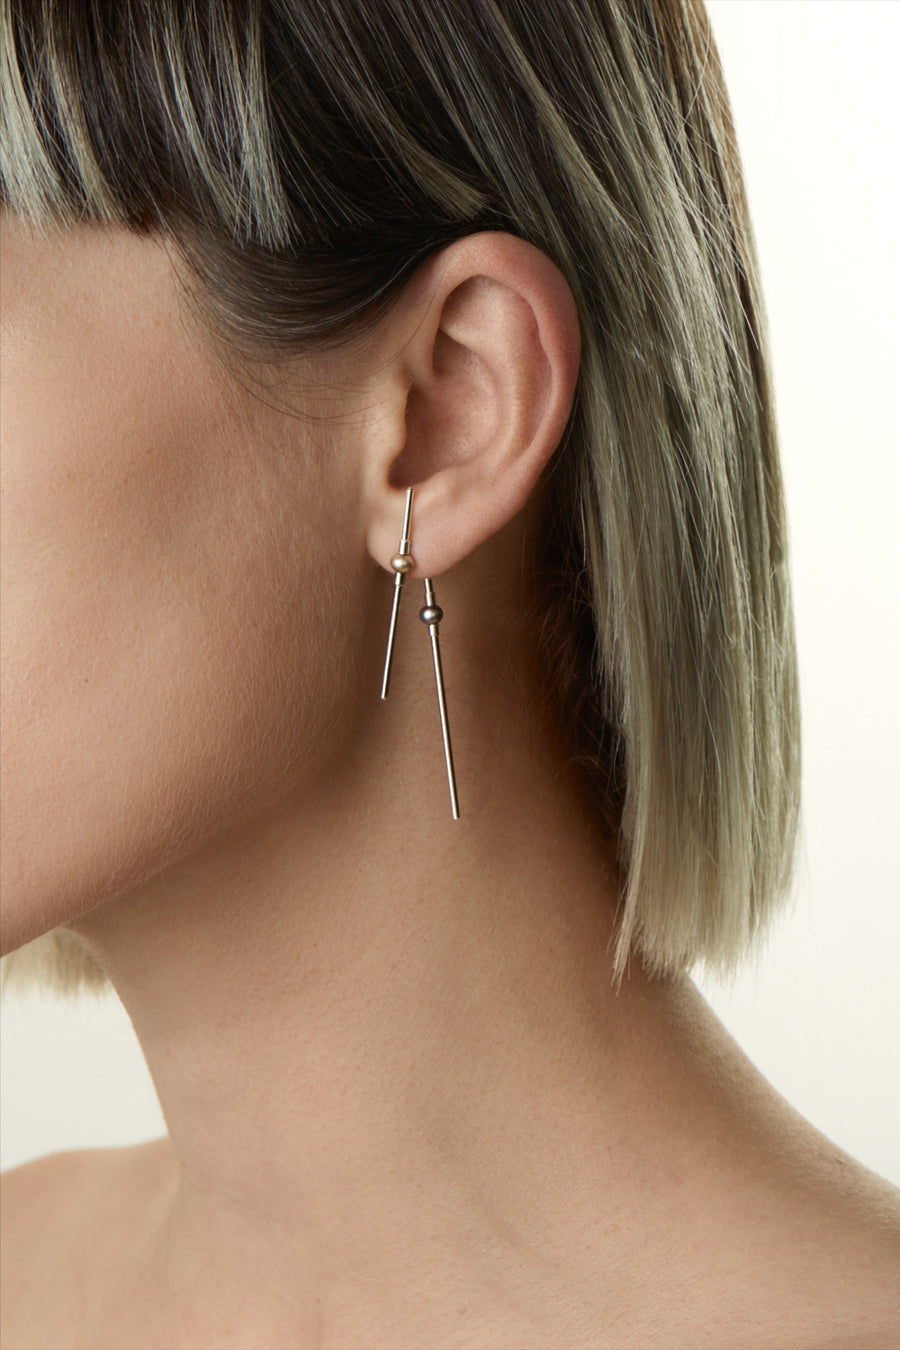 Pearline double sided earring